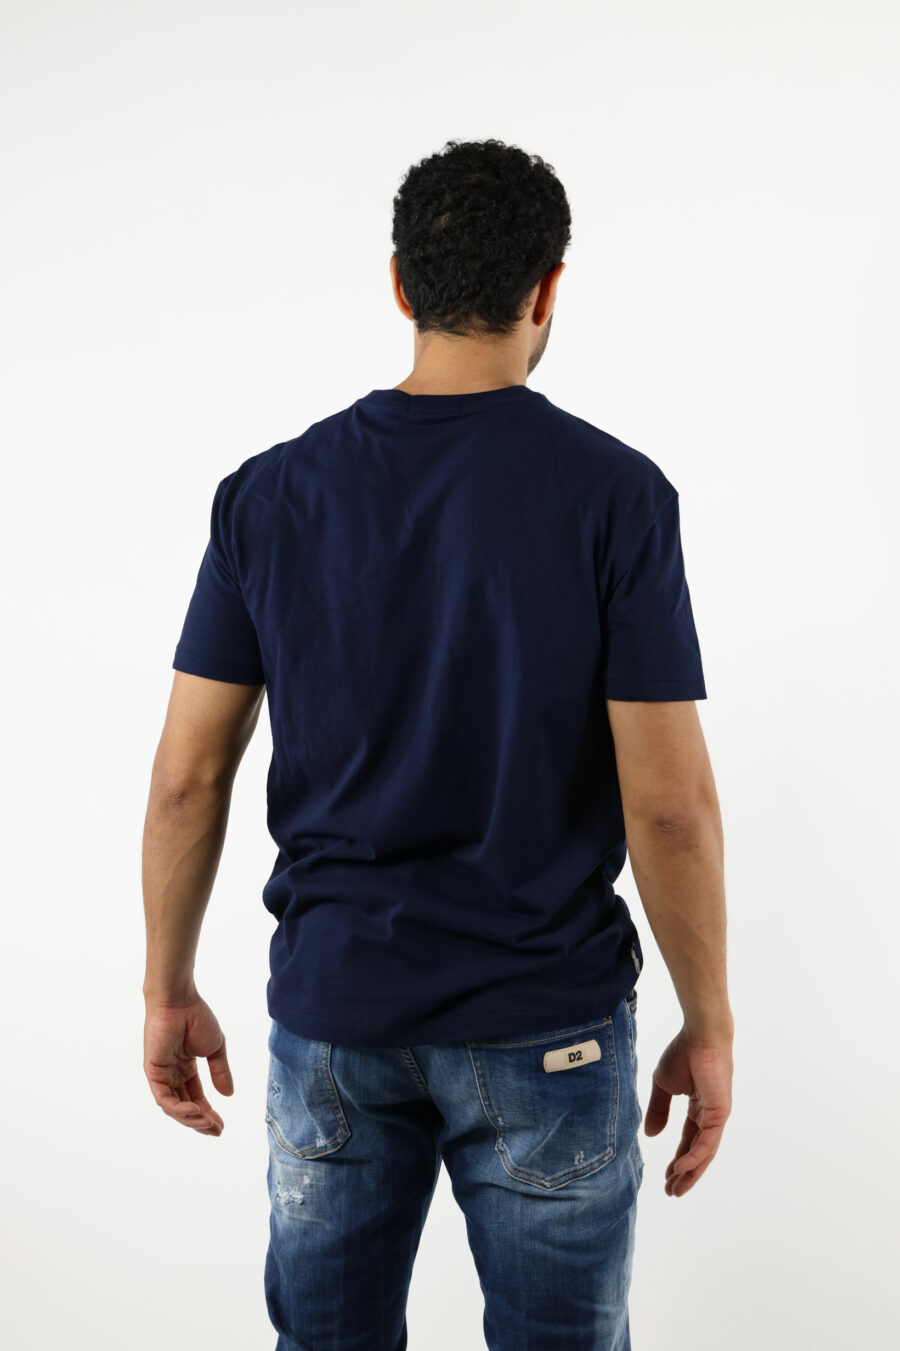 T-shirt bleu foncé avec maxilogo "polo" blanc - 111237